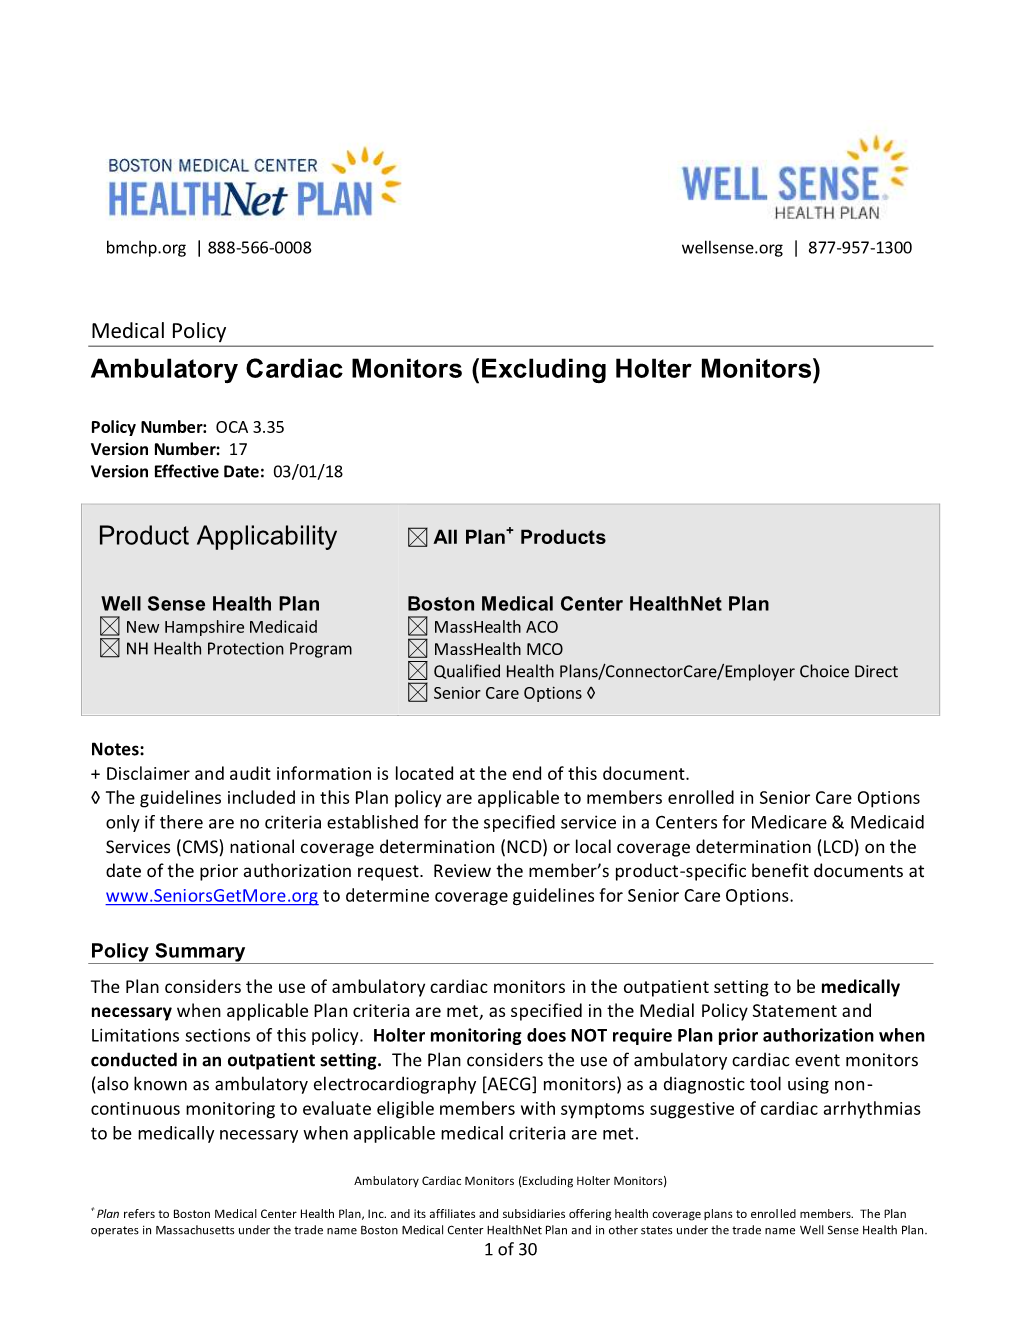 Ambulatory Cardiac Monitors (Excluding Holter Monitors)